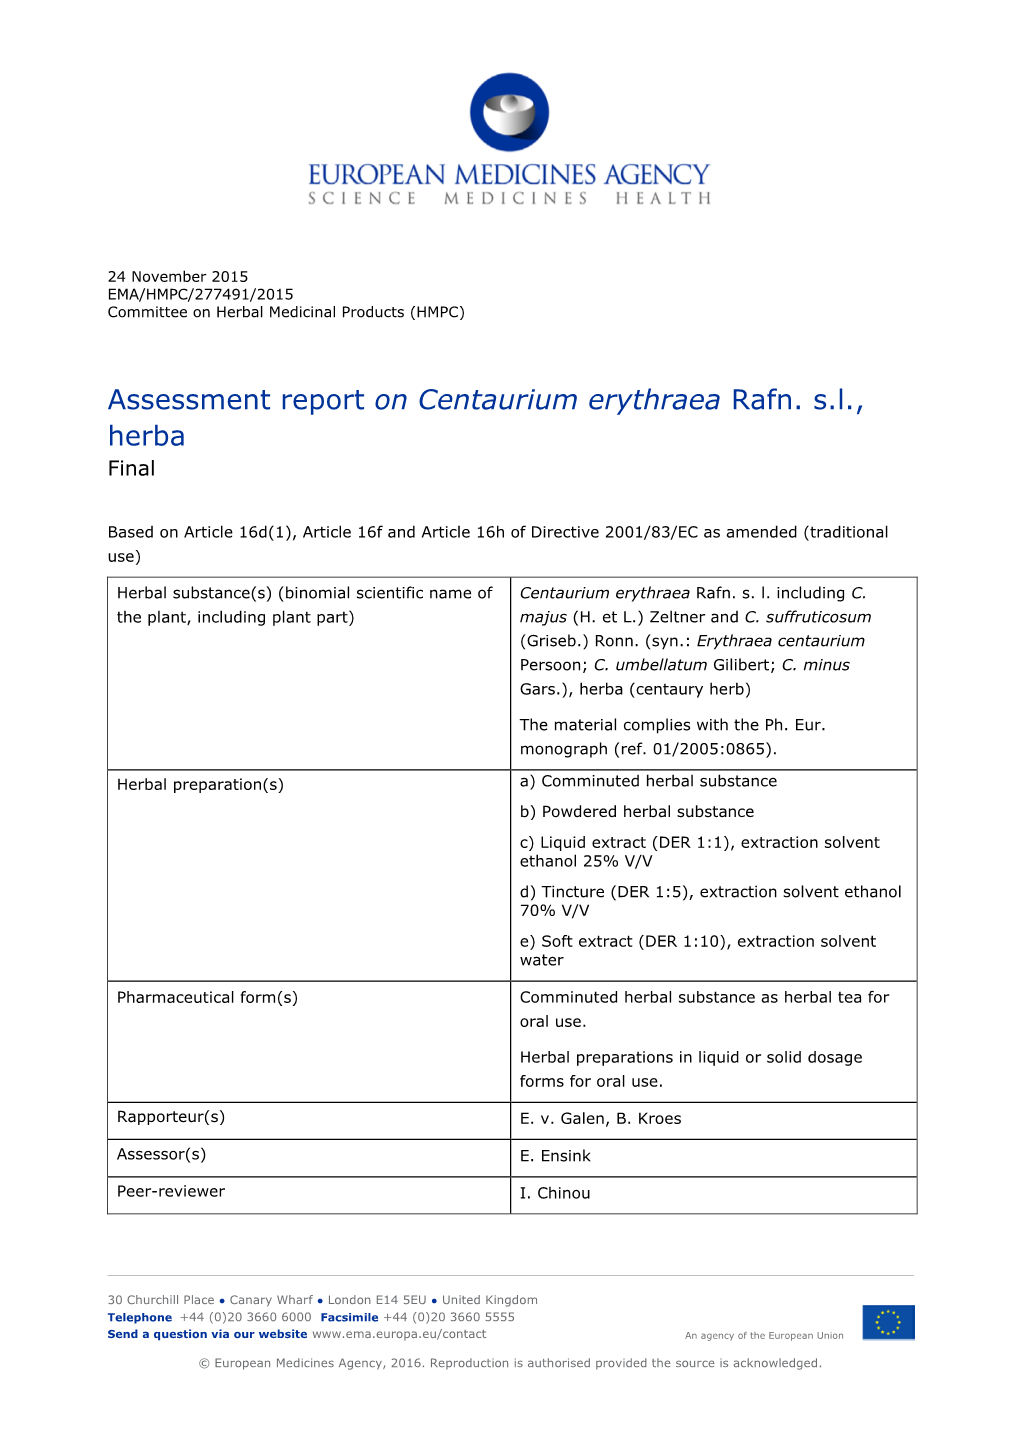 Assessment Report on Centaurium Erythraea Rafn. S.L., Herba Final